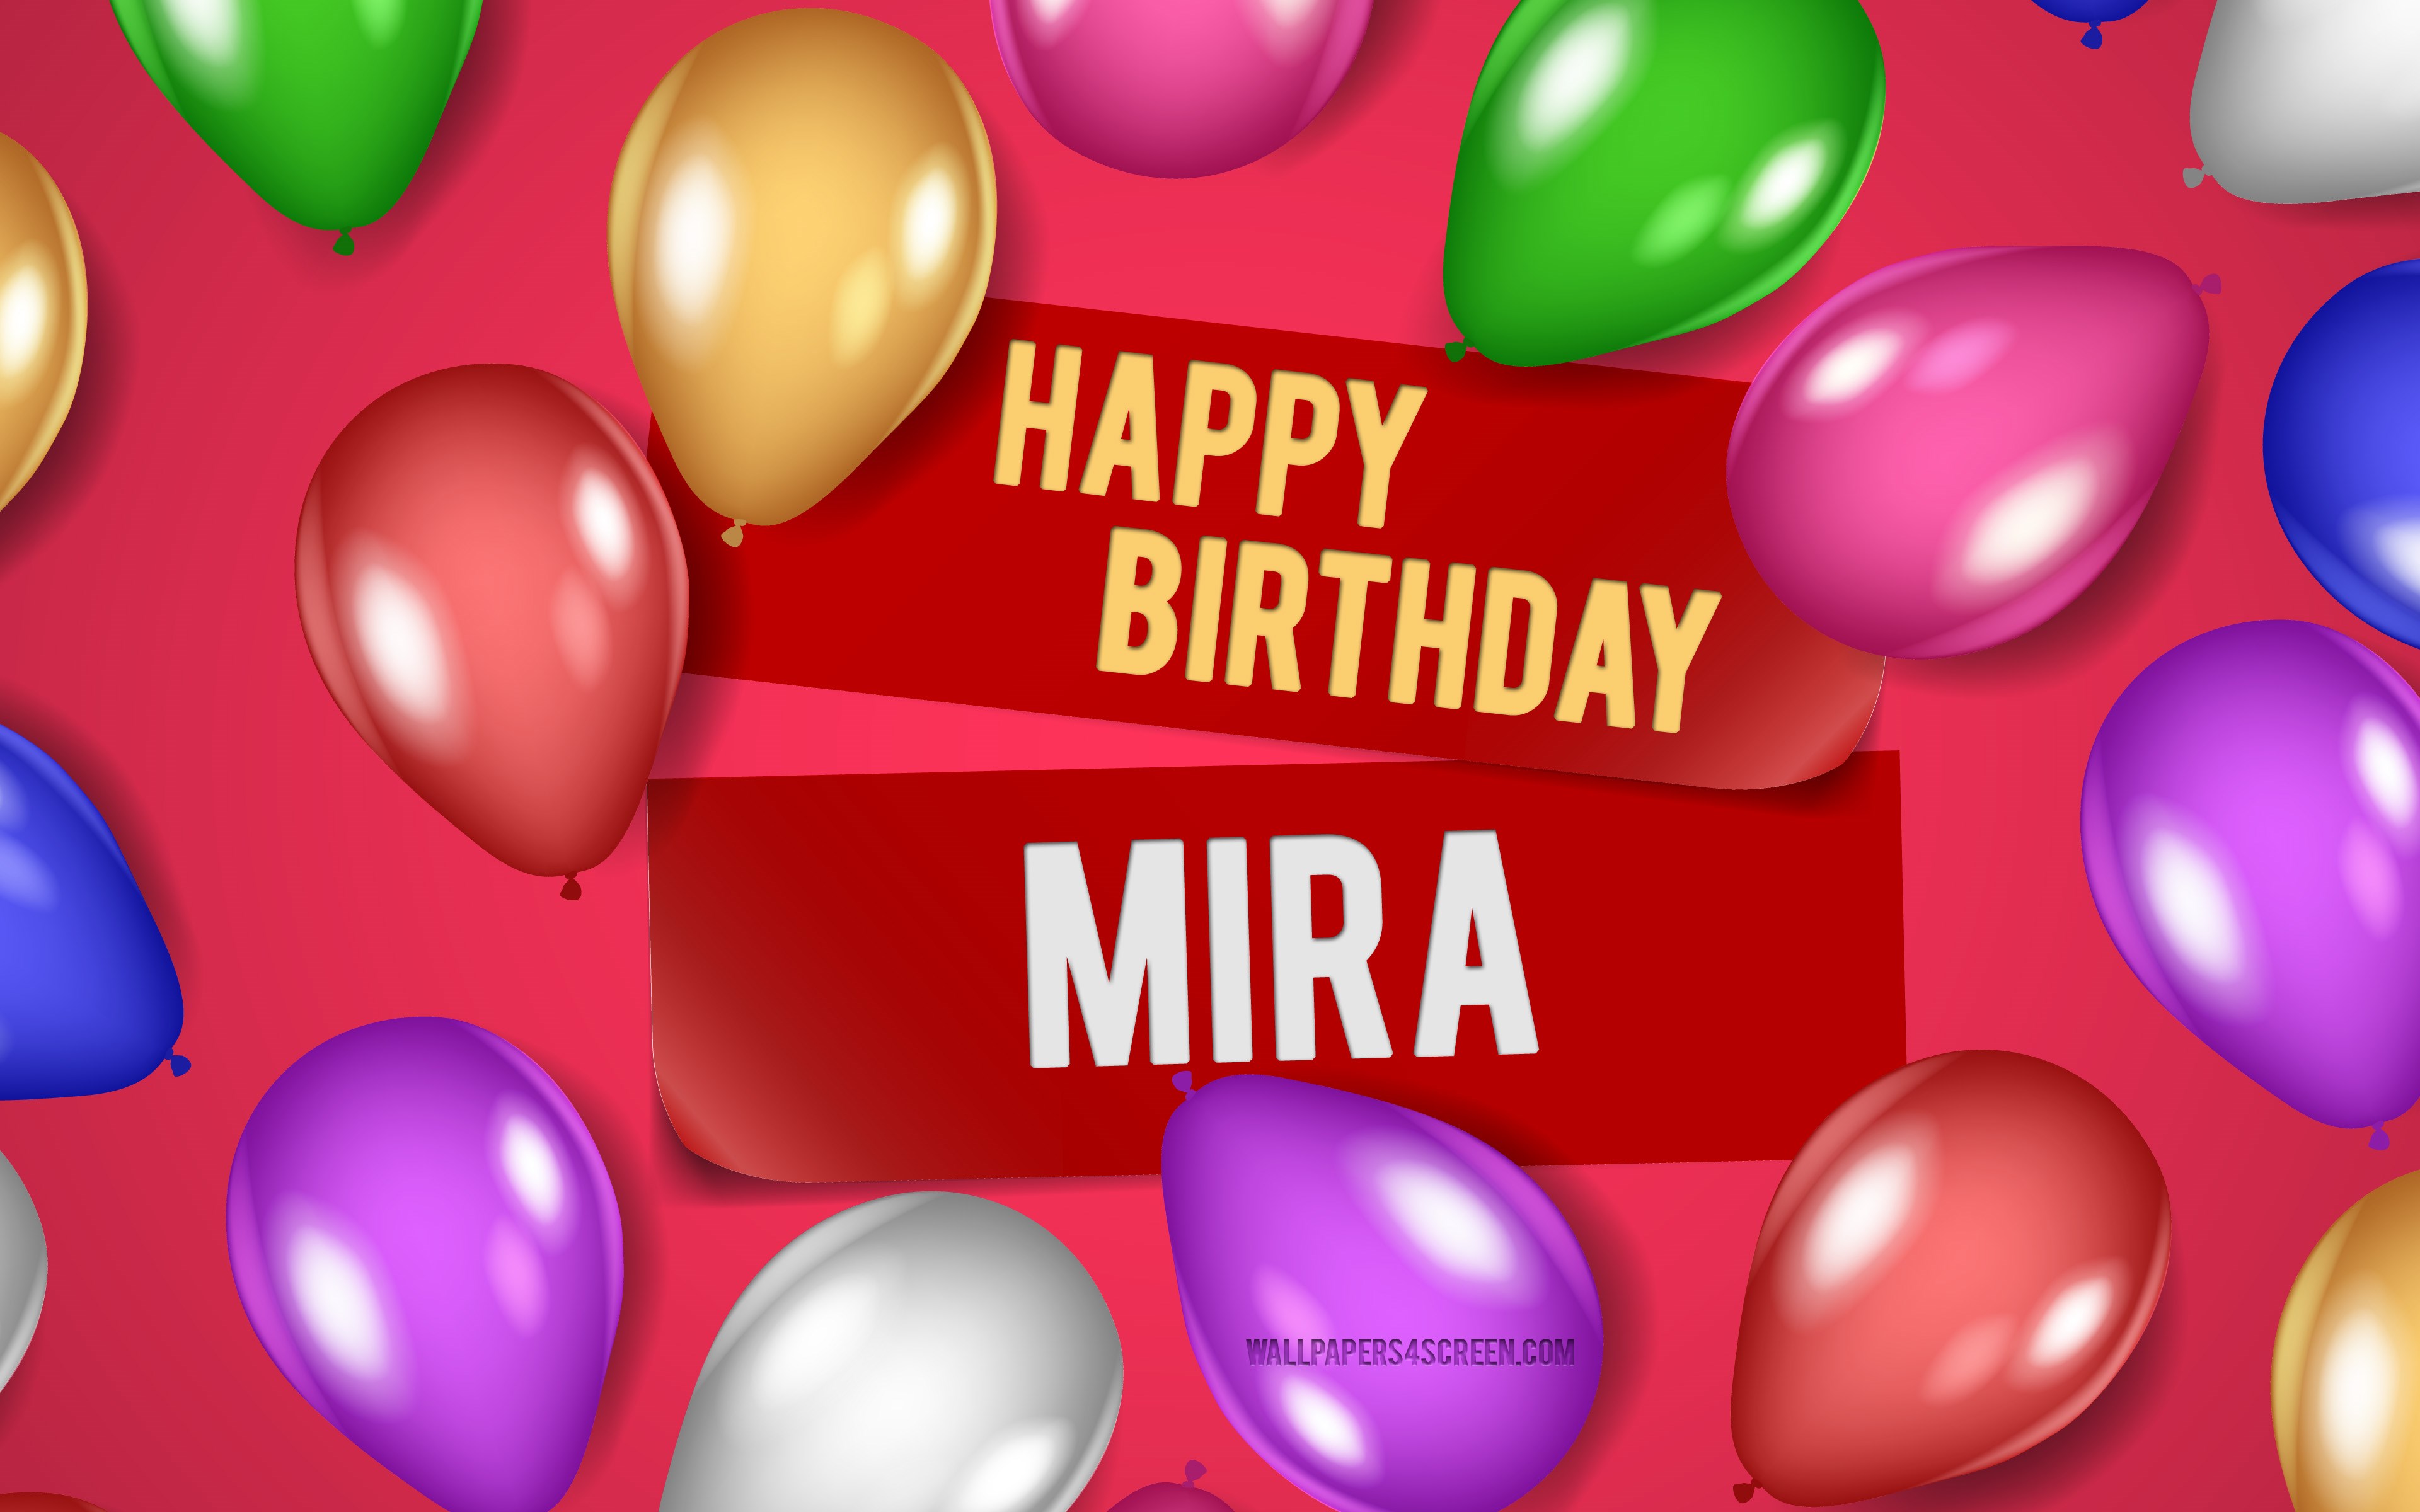 Download wallpapers 4k, Mira Happy Birthday, pink backgrounds, Mira ...